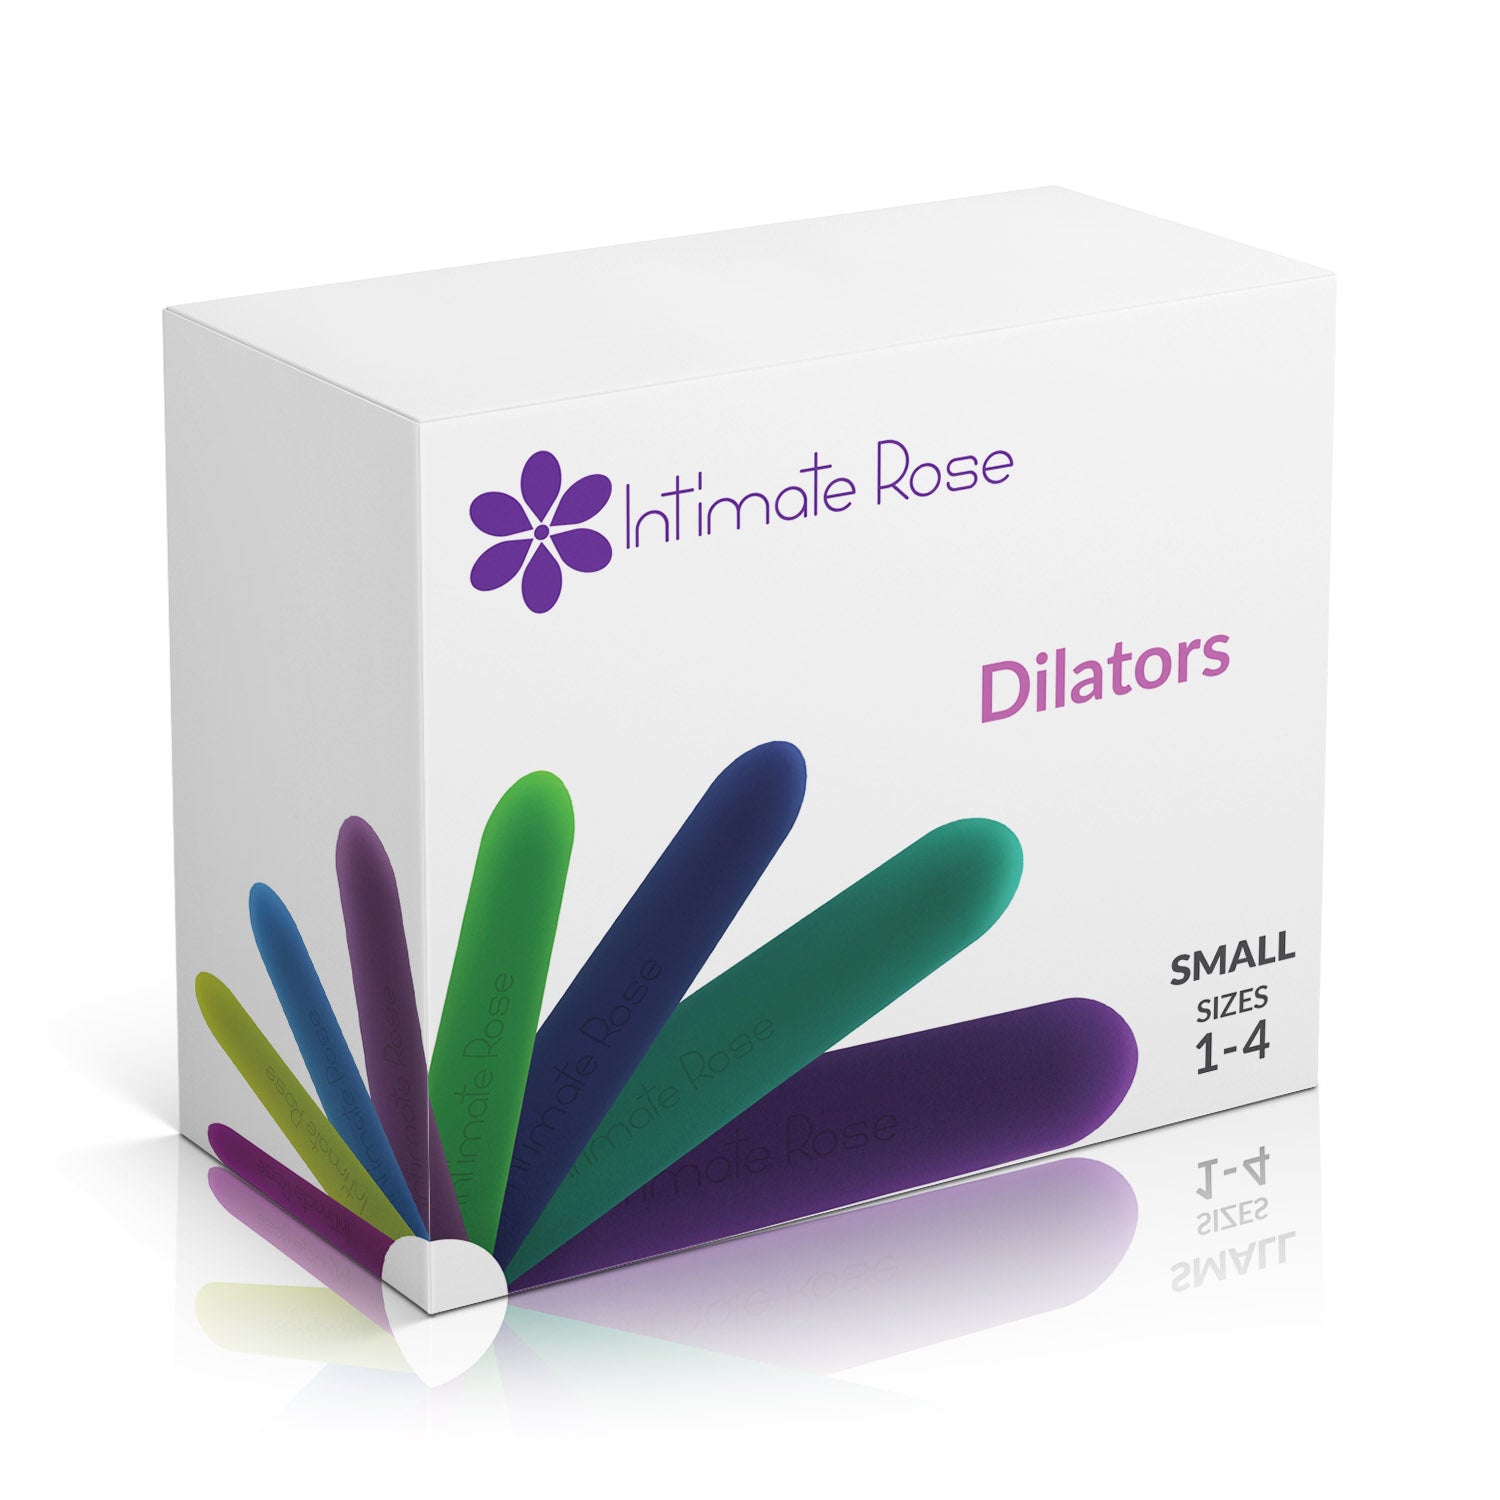 Vaginal Dilator